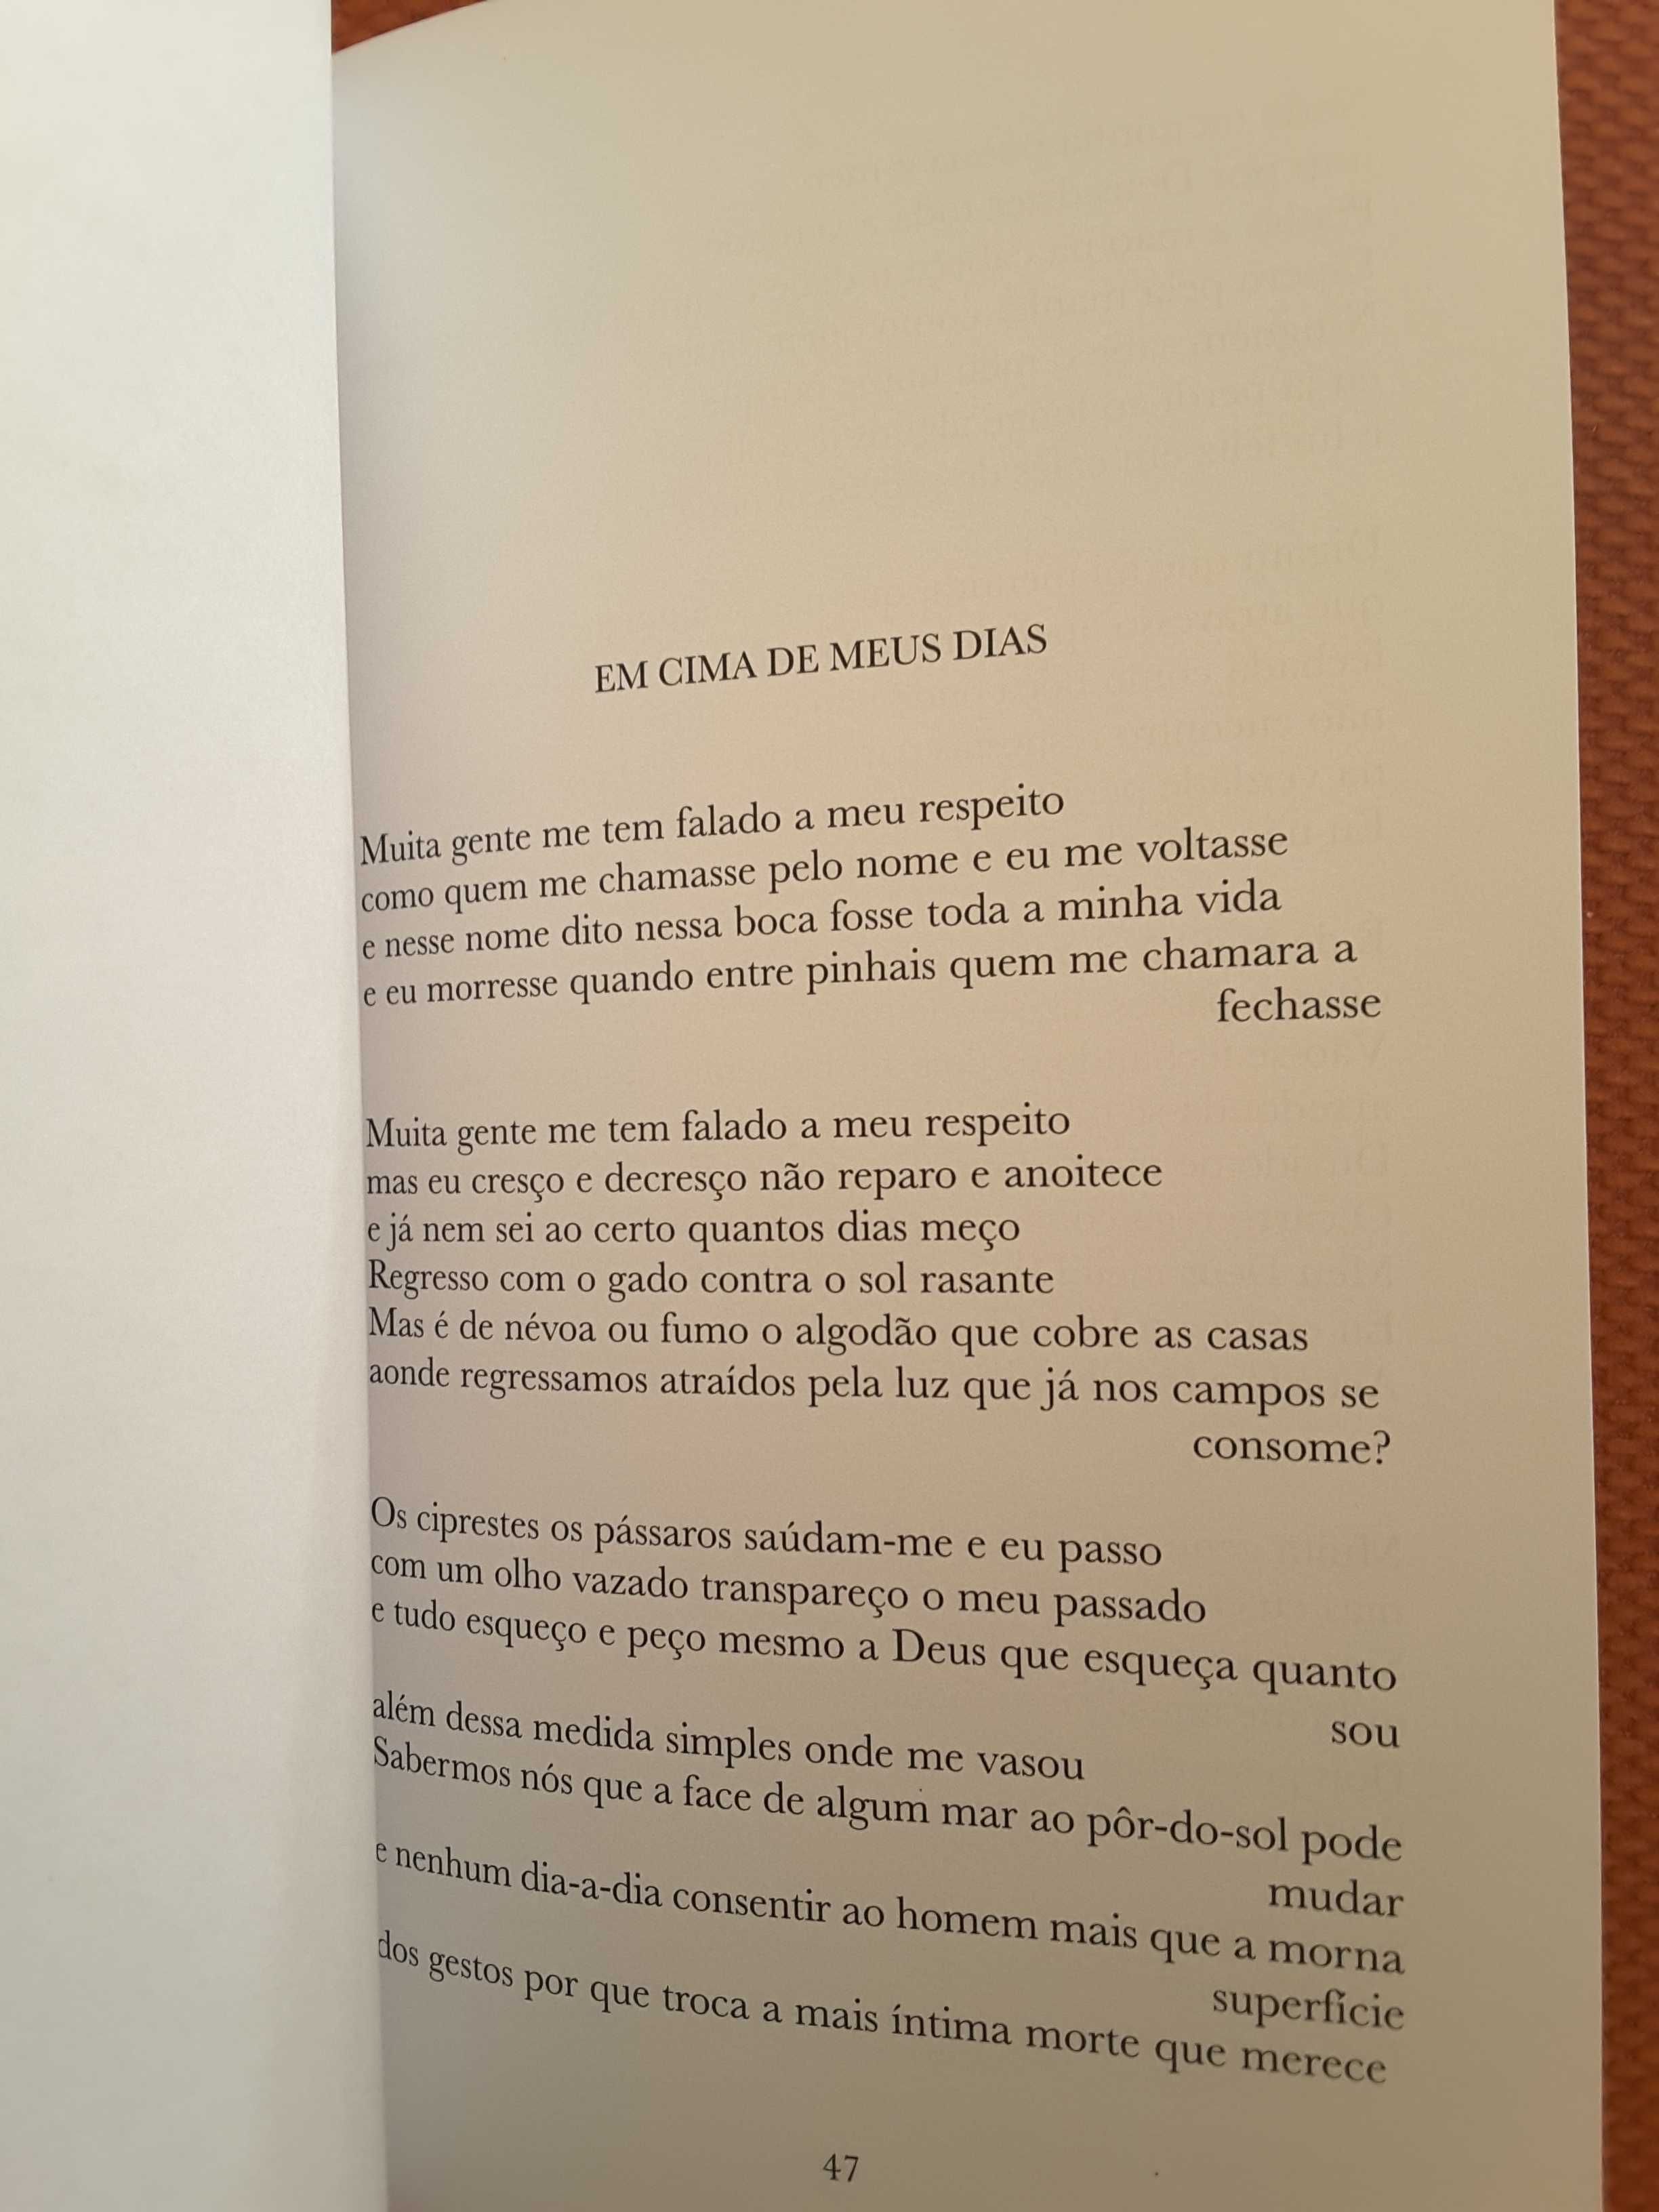 Obras de Ruy Belo / António Osório: Antologia Poética